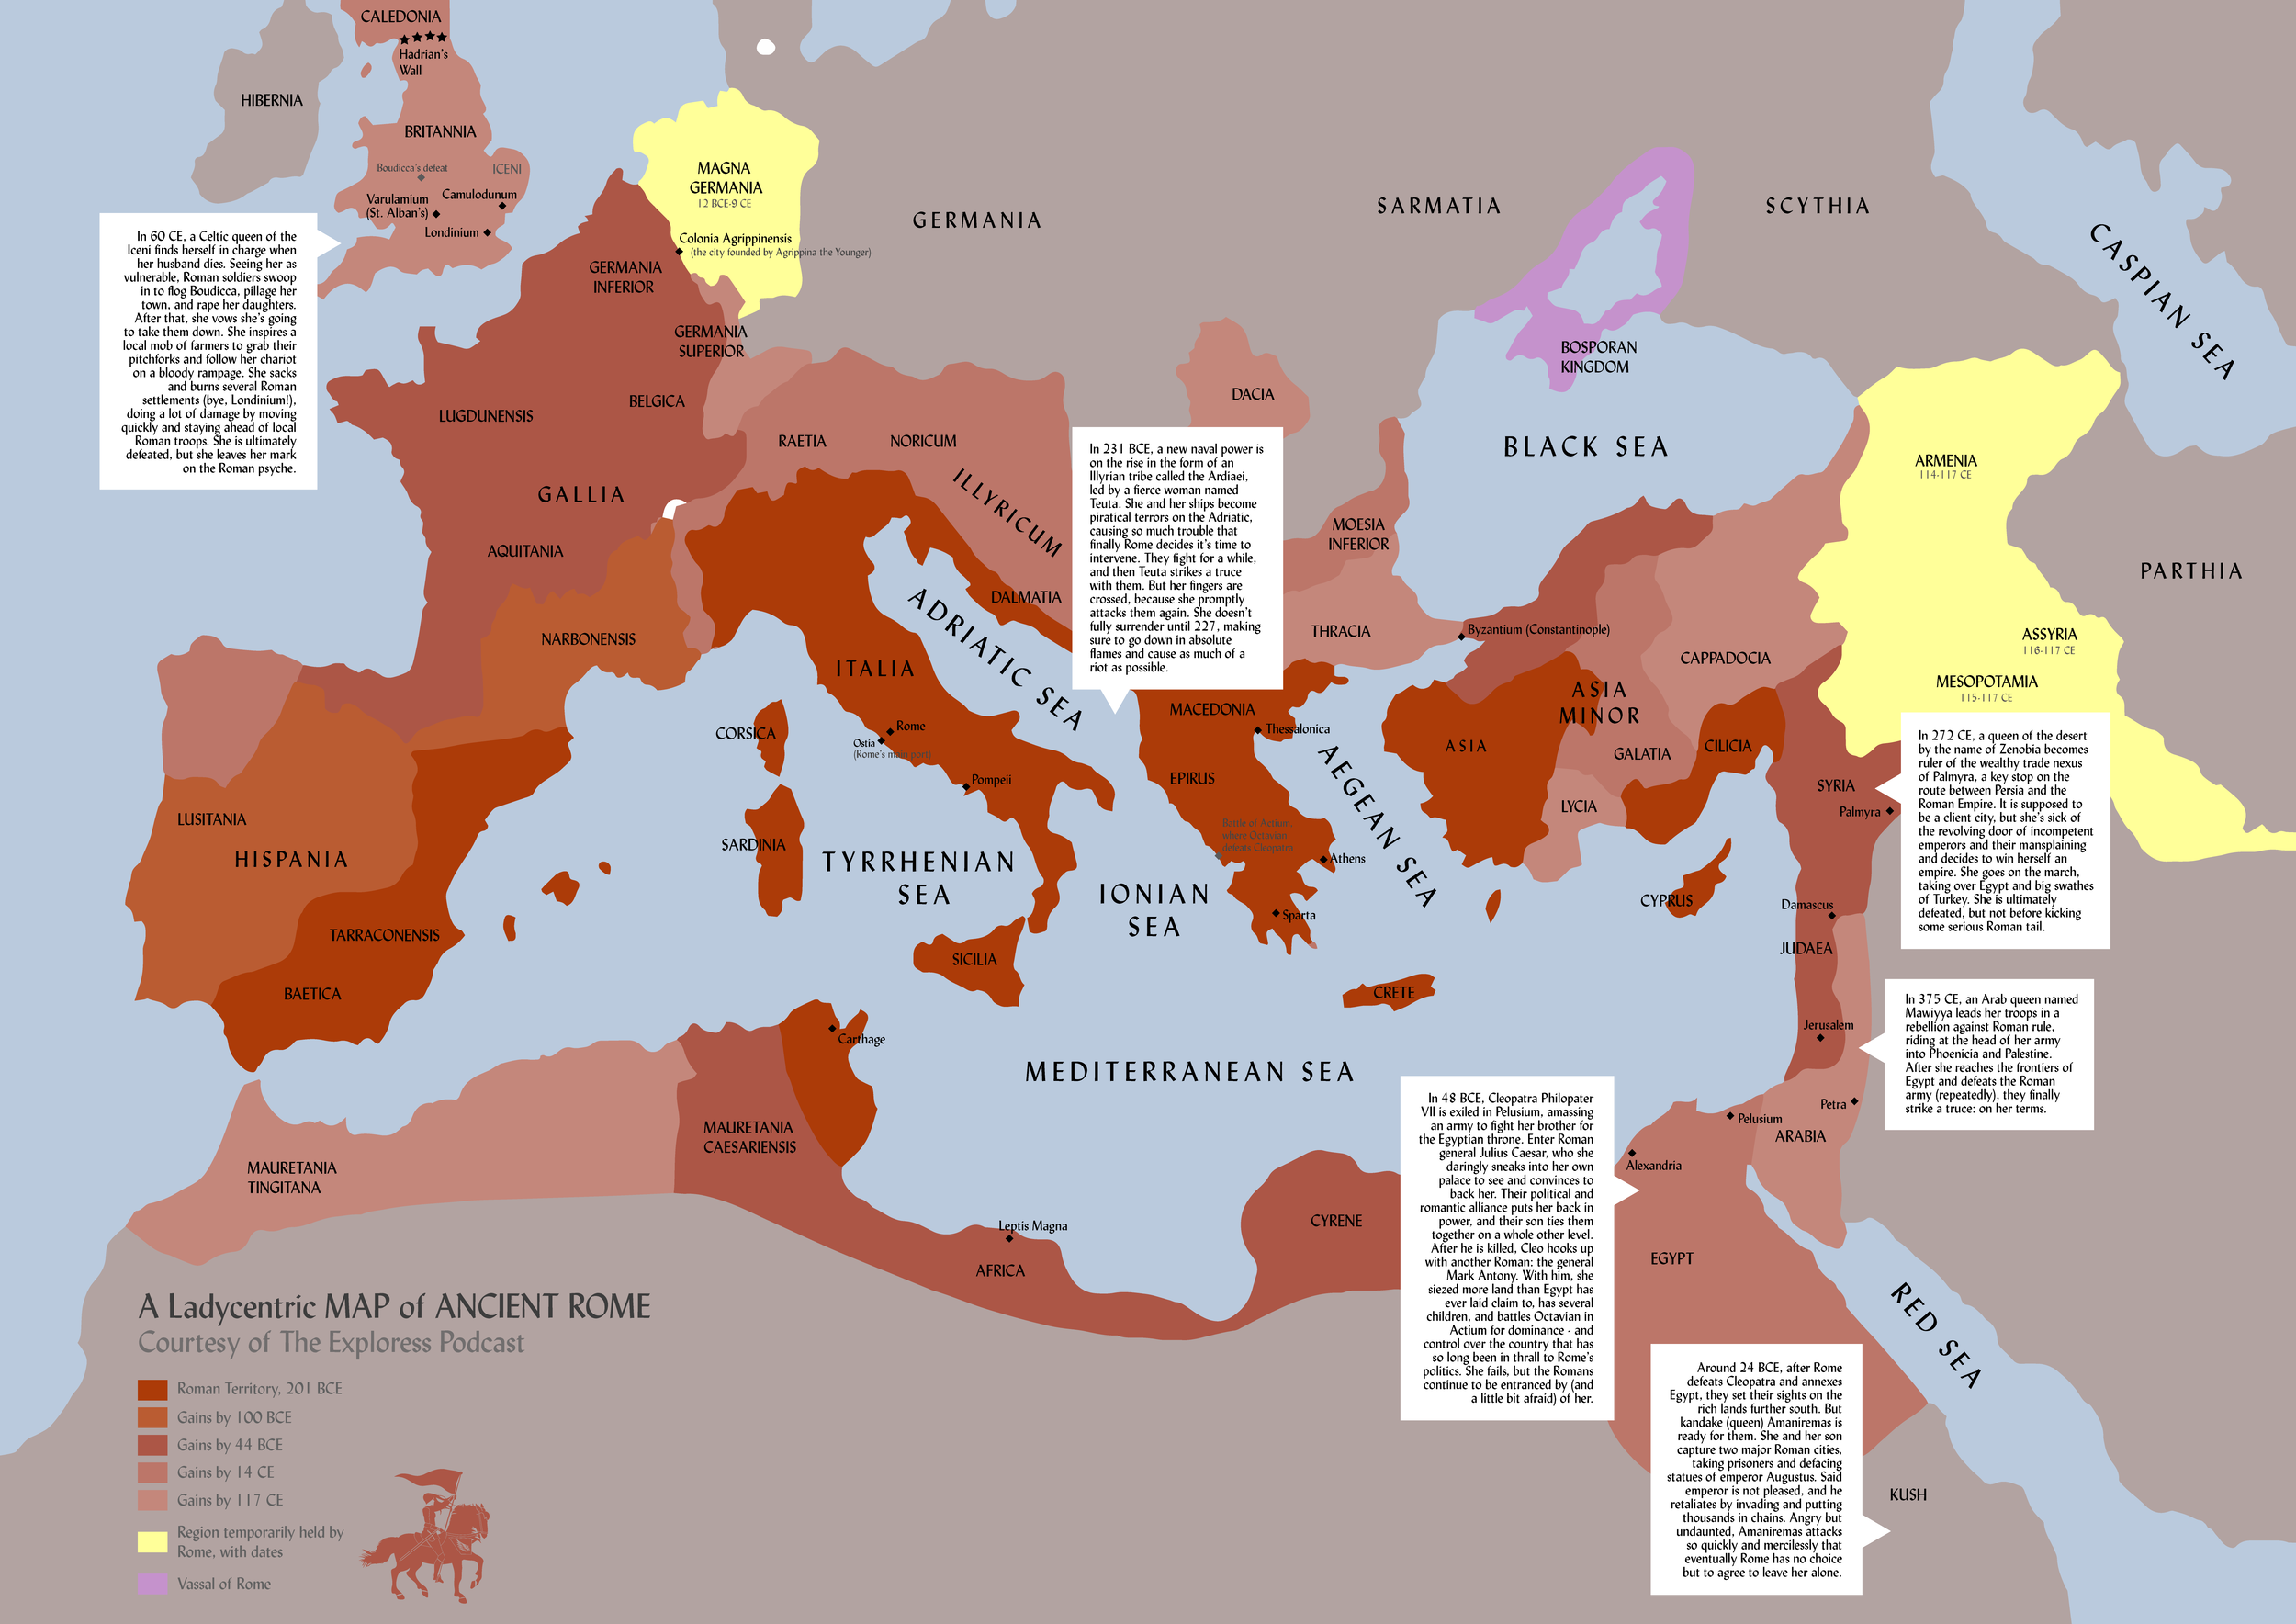 Timeline Of Roman Empire